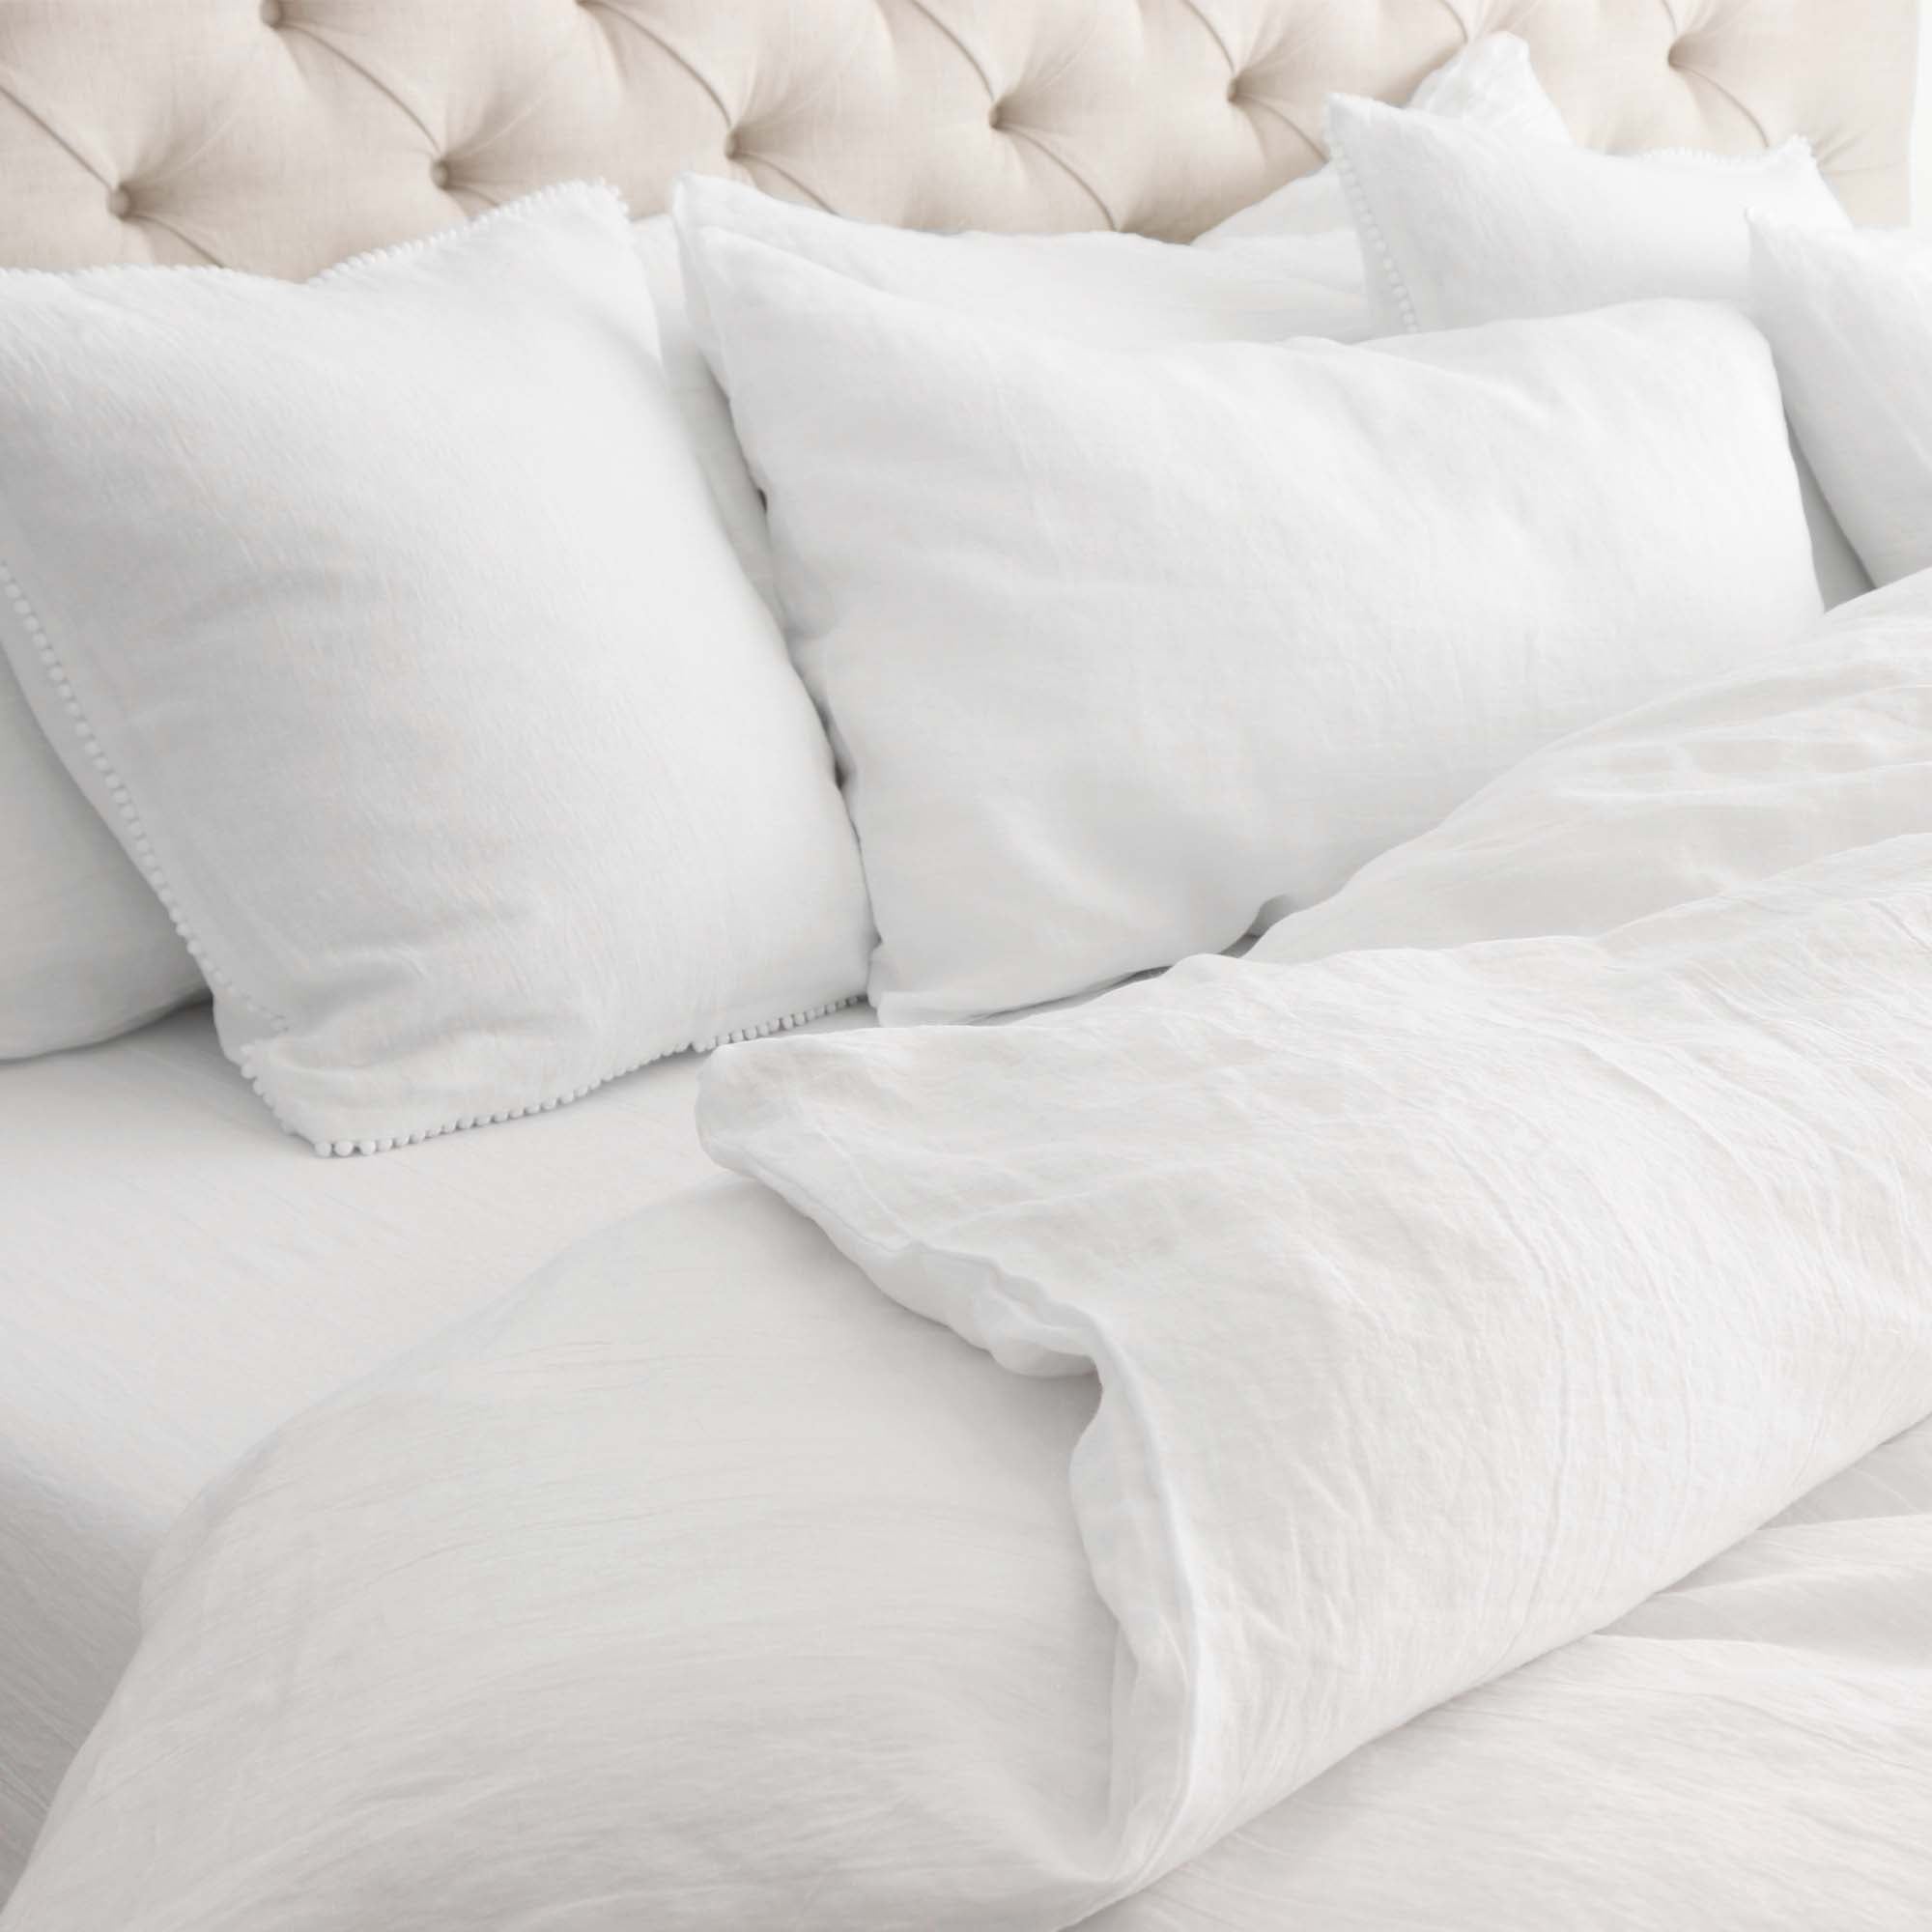 European White Linen OEKO-TEX Bedding with Pillow Case Covers with Duvet  Edit alt text